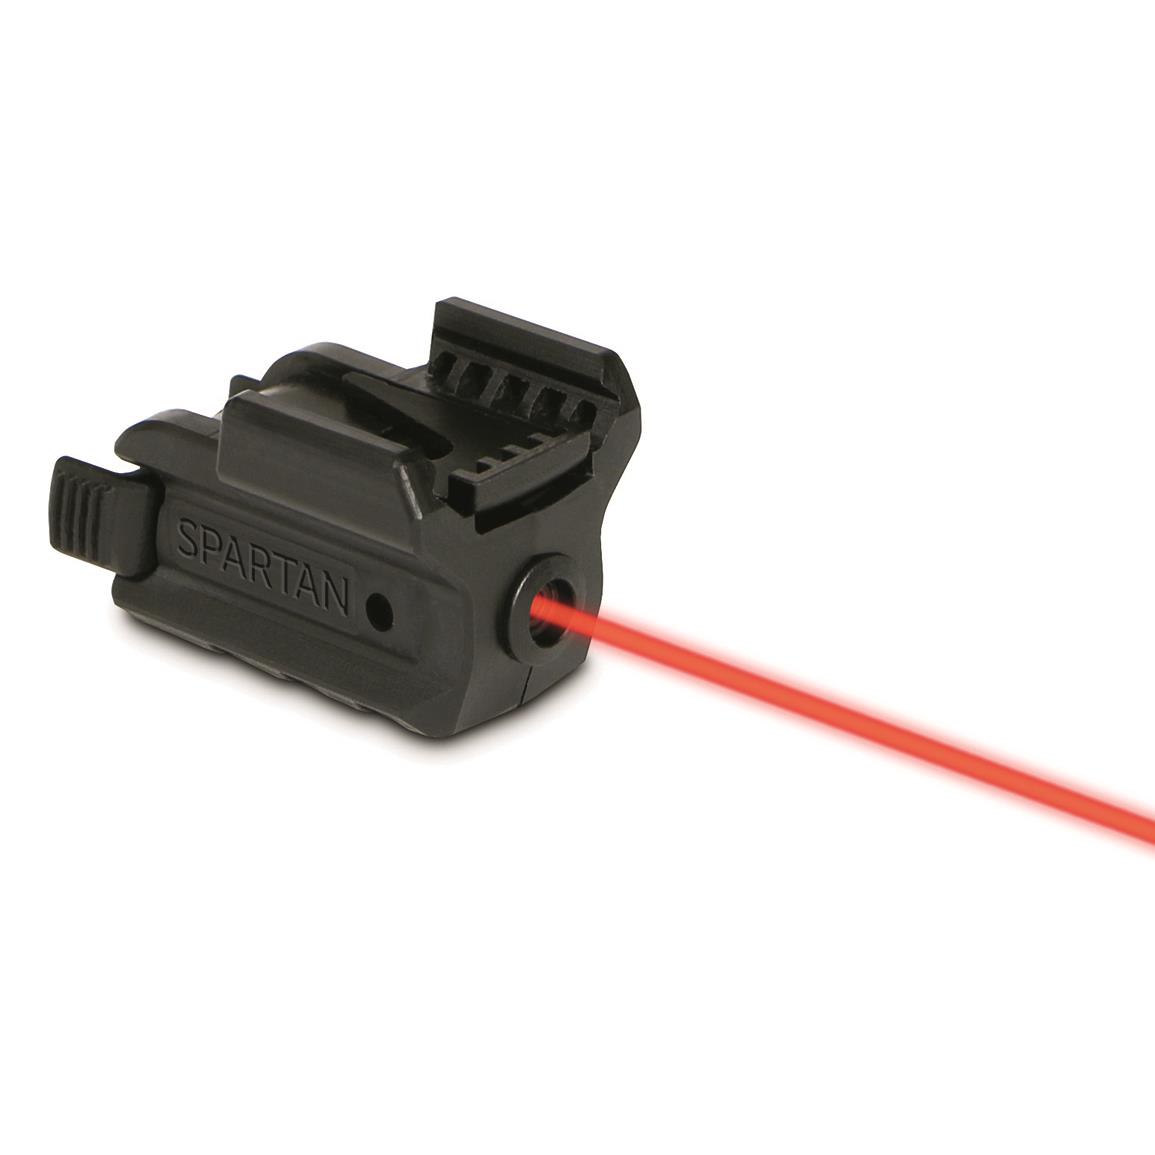 LaserMax Spartan Series SPS-R Adjustable Red Laser Sight